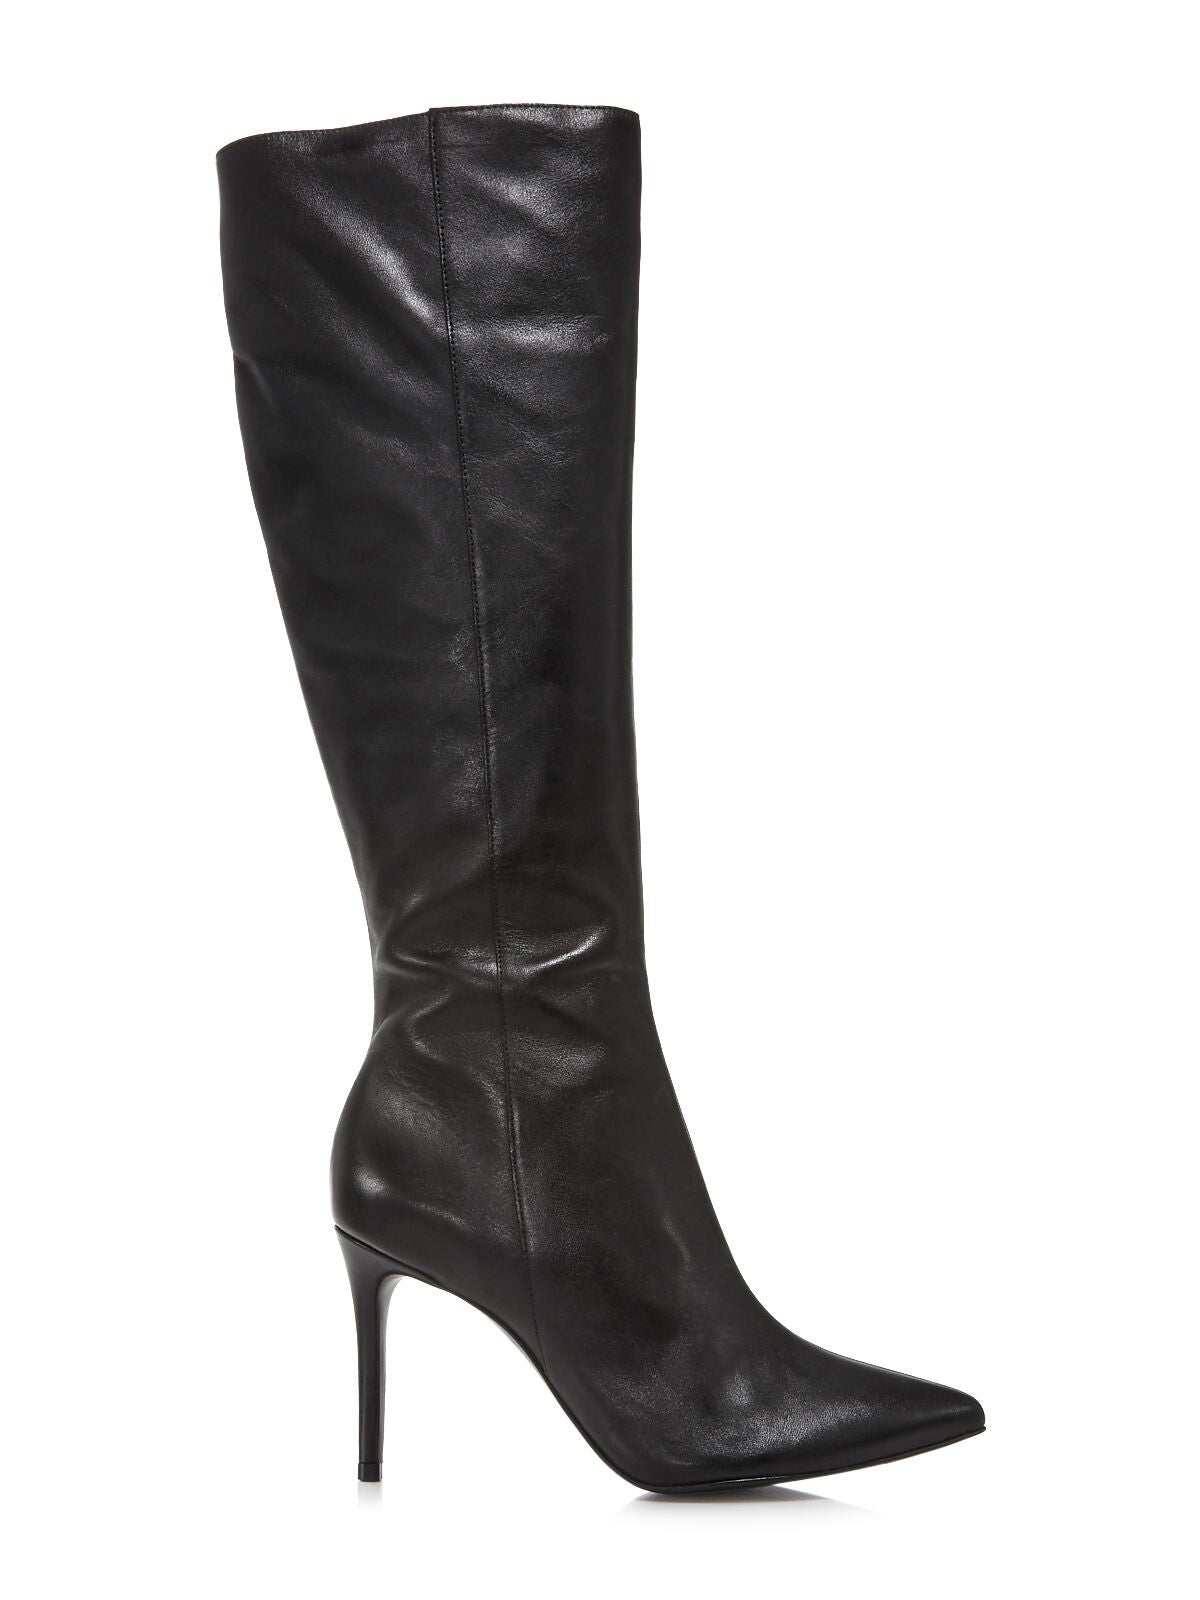 AQUA Womens Black Goring Cushioned Indiala Pointed Toe Stiletto Zip-Up Leather Heeled Boots 11 B